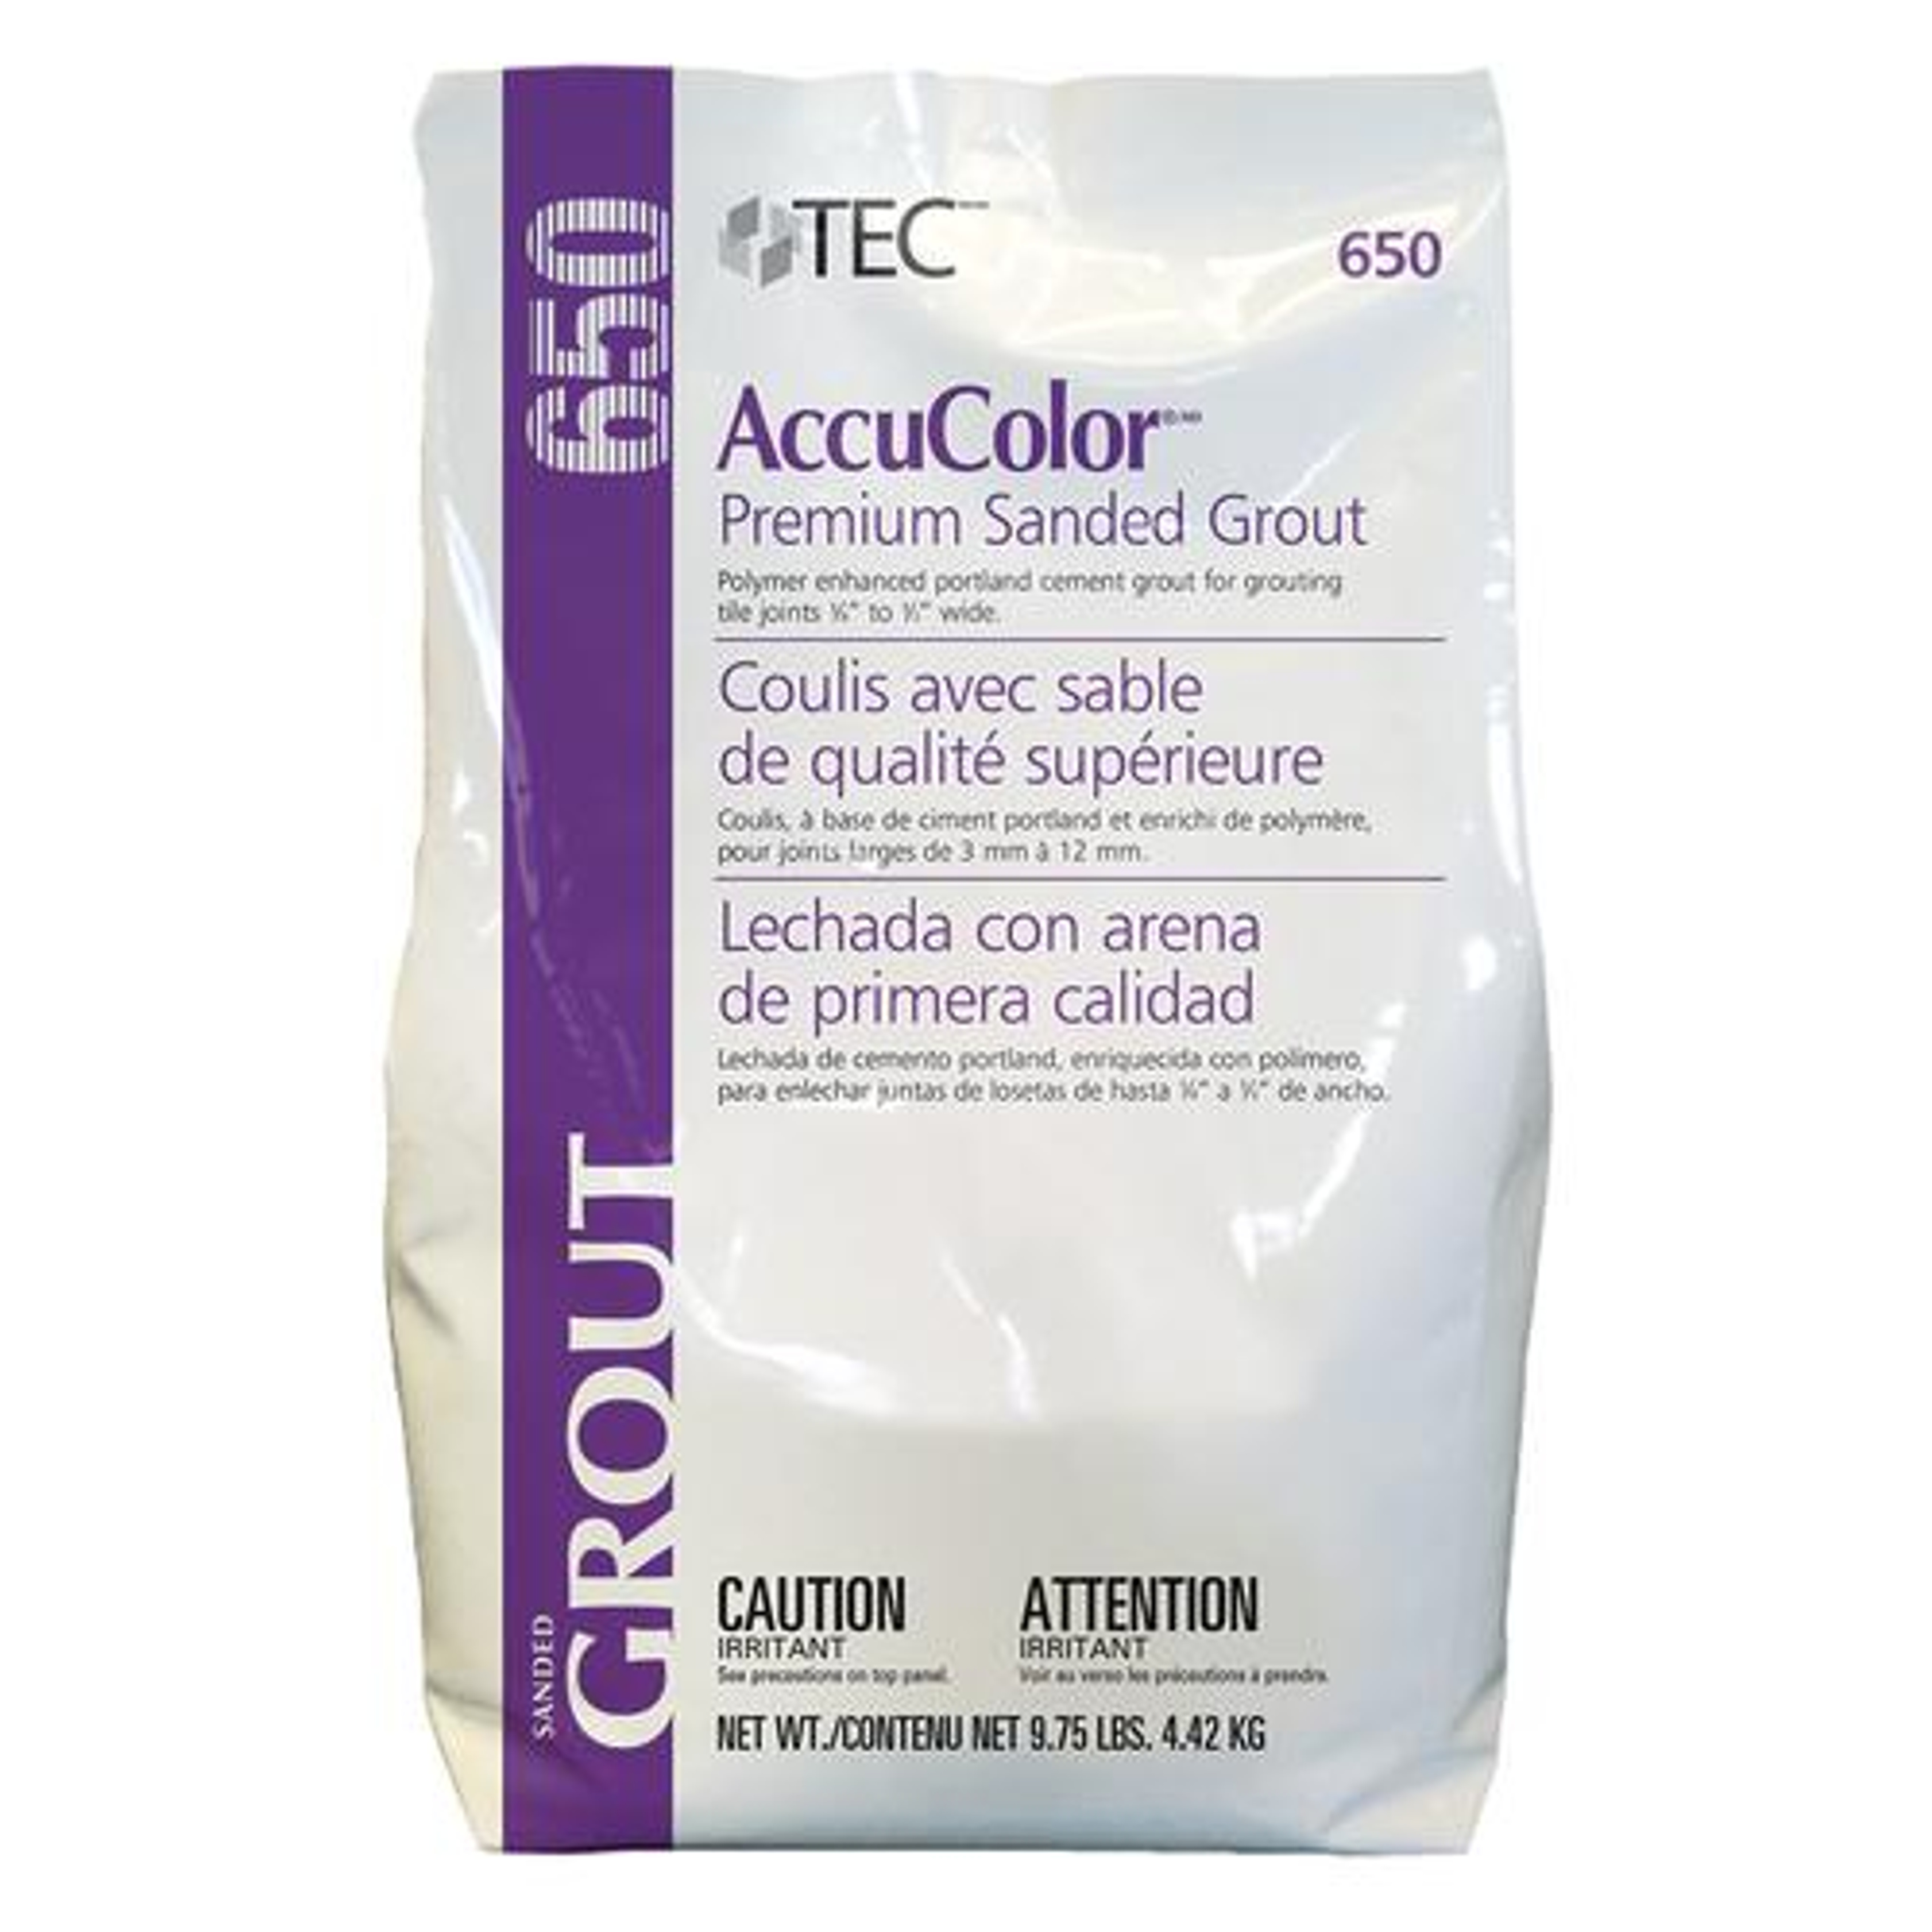 TEC® AccuColor® Antique White #940 Premium Sanded Grout 650 - 9.75 lbs.